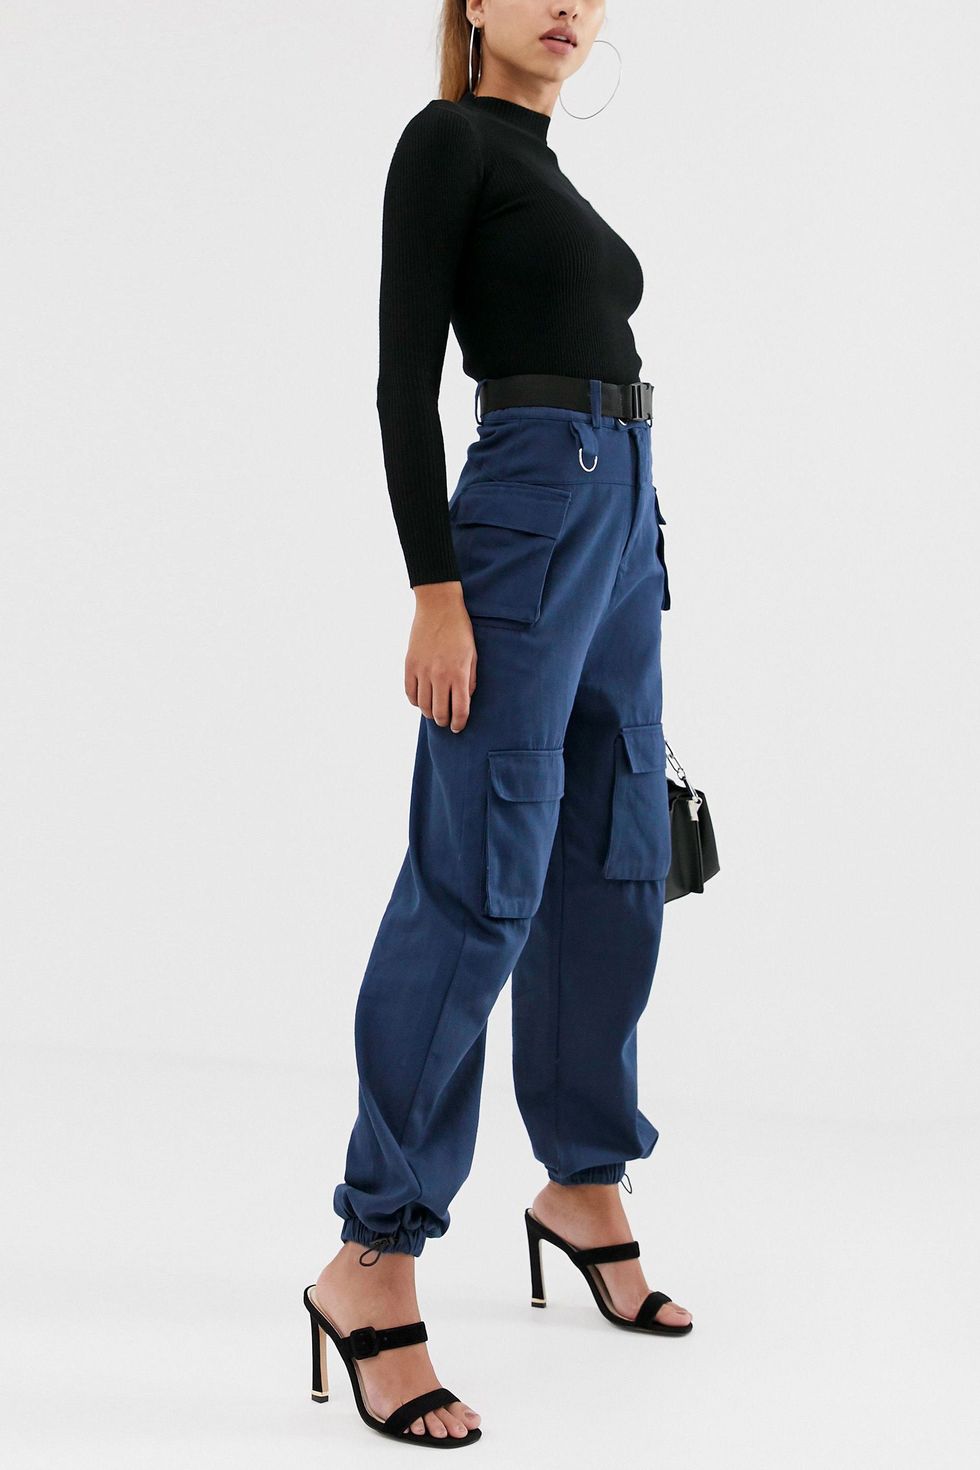 Satin cargo pocket trousers - Women's fashion